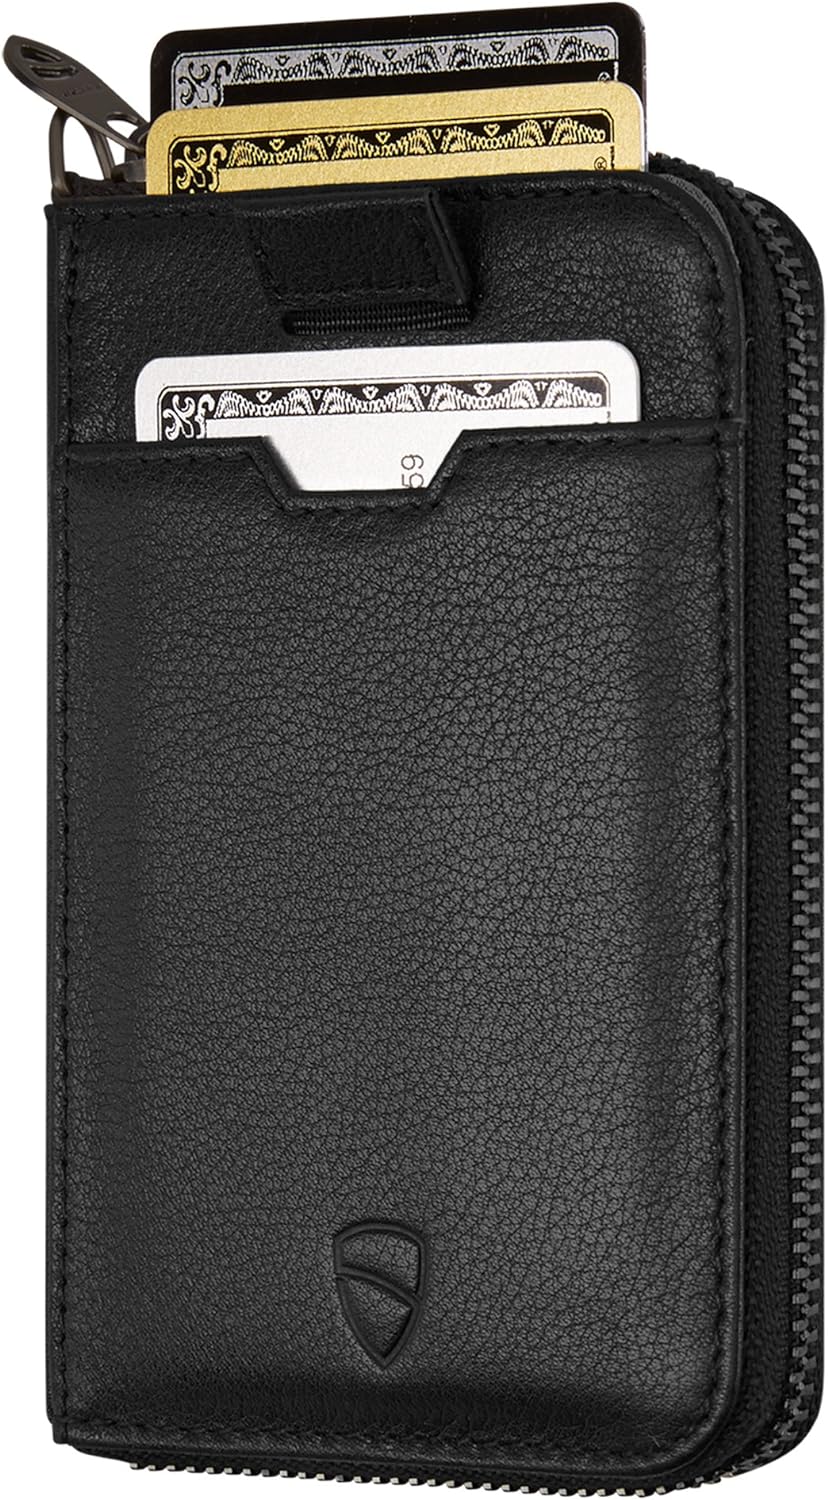 Vaultskin NOTTING HILL Slim Zipper Wallet - RFID Blocking Card Holder